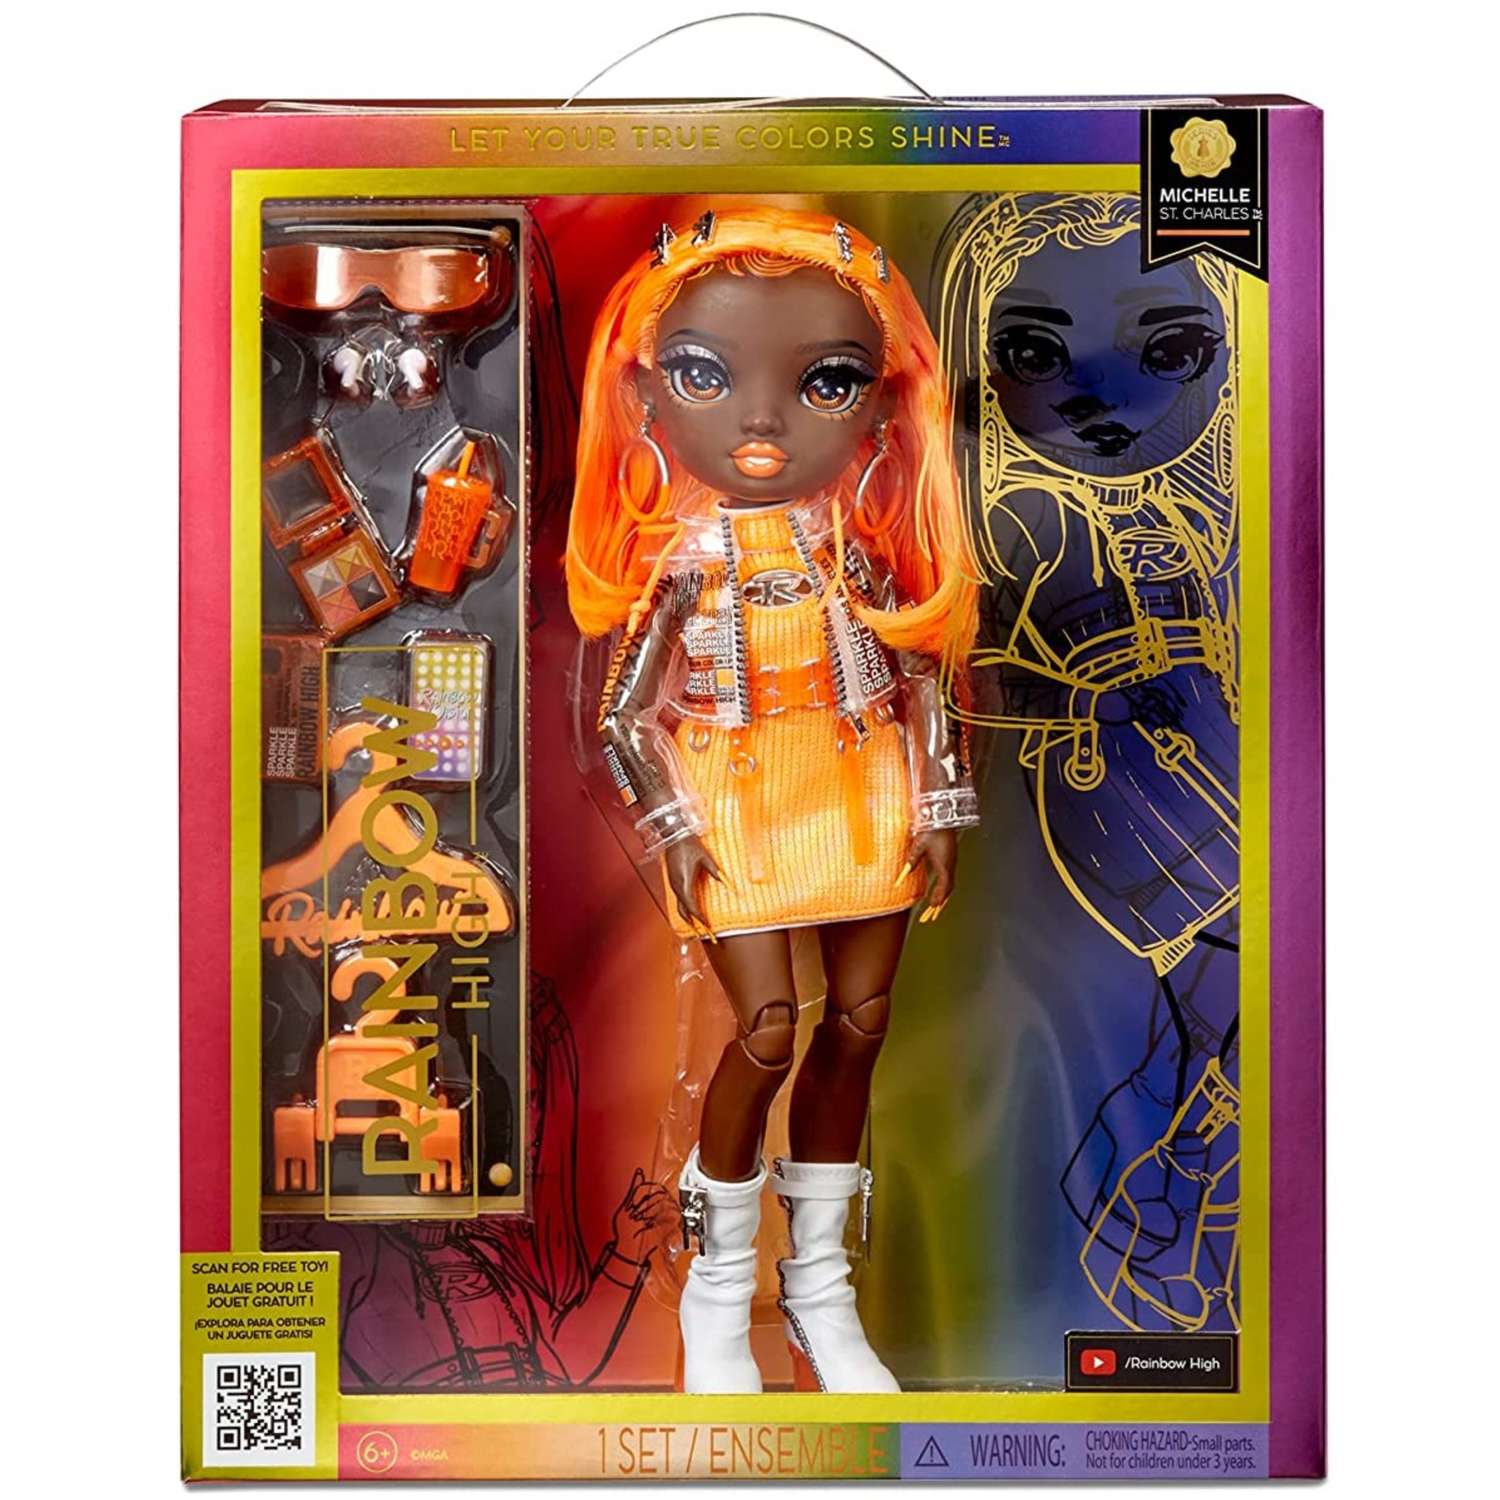 Кукла Rainbow High Michelle Orange Fashion Doll -Рейнбоу Хай Мишель Сен Шарль 583127 Rainbow High Michelle - фото 1